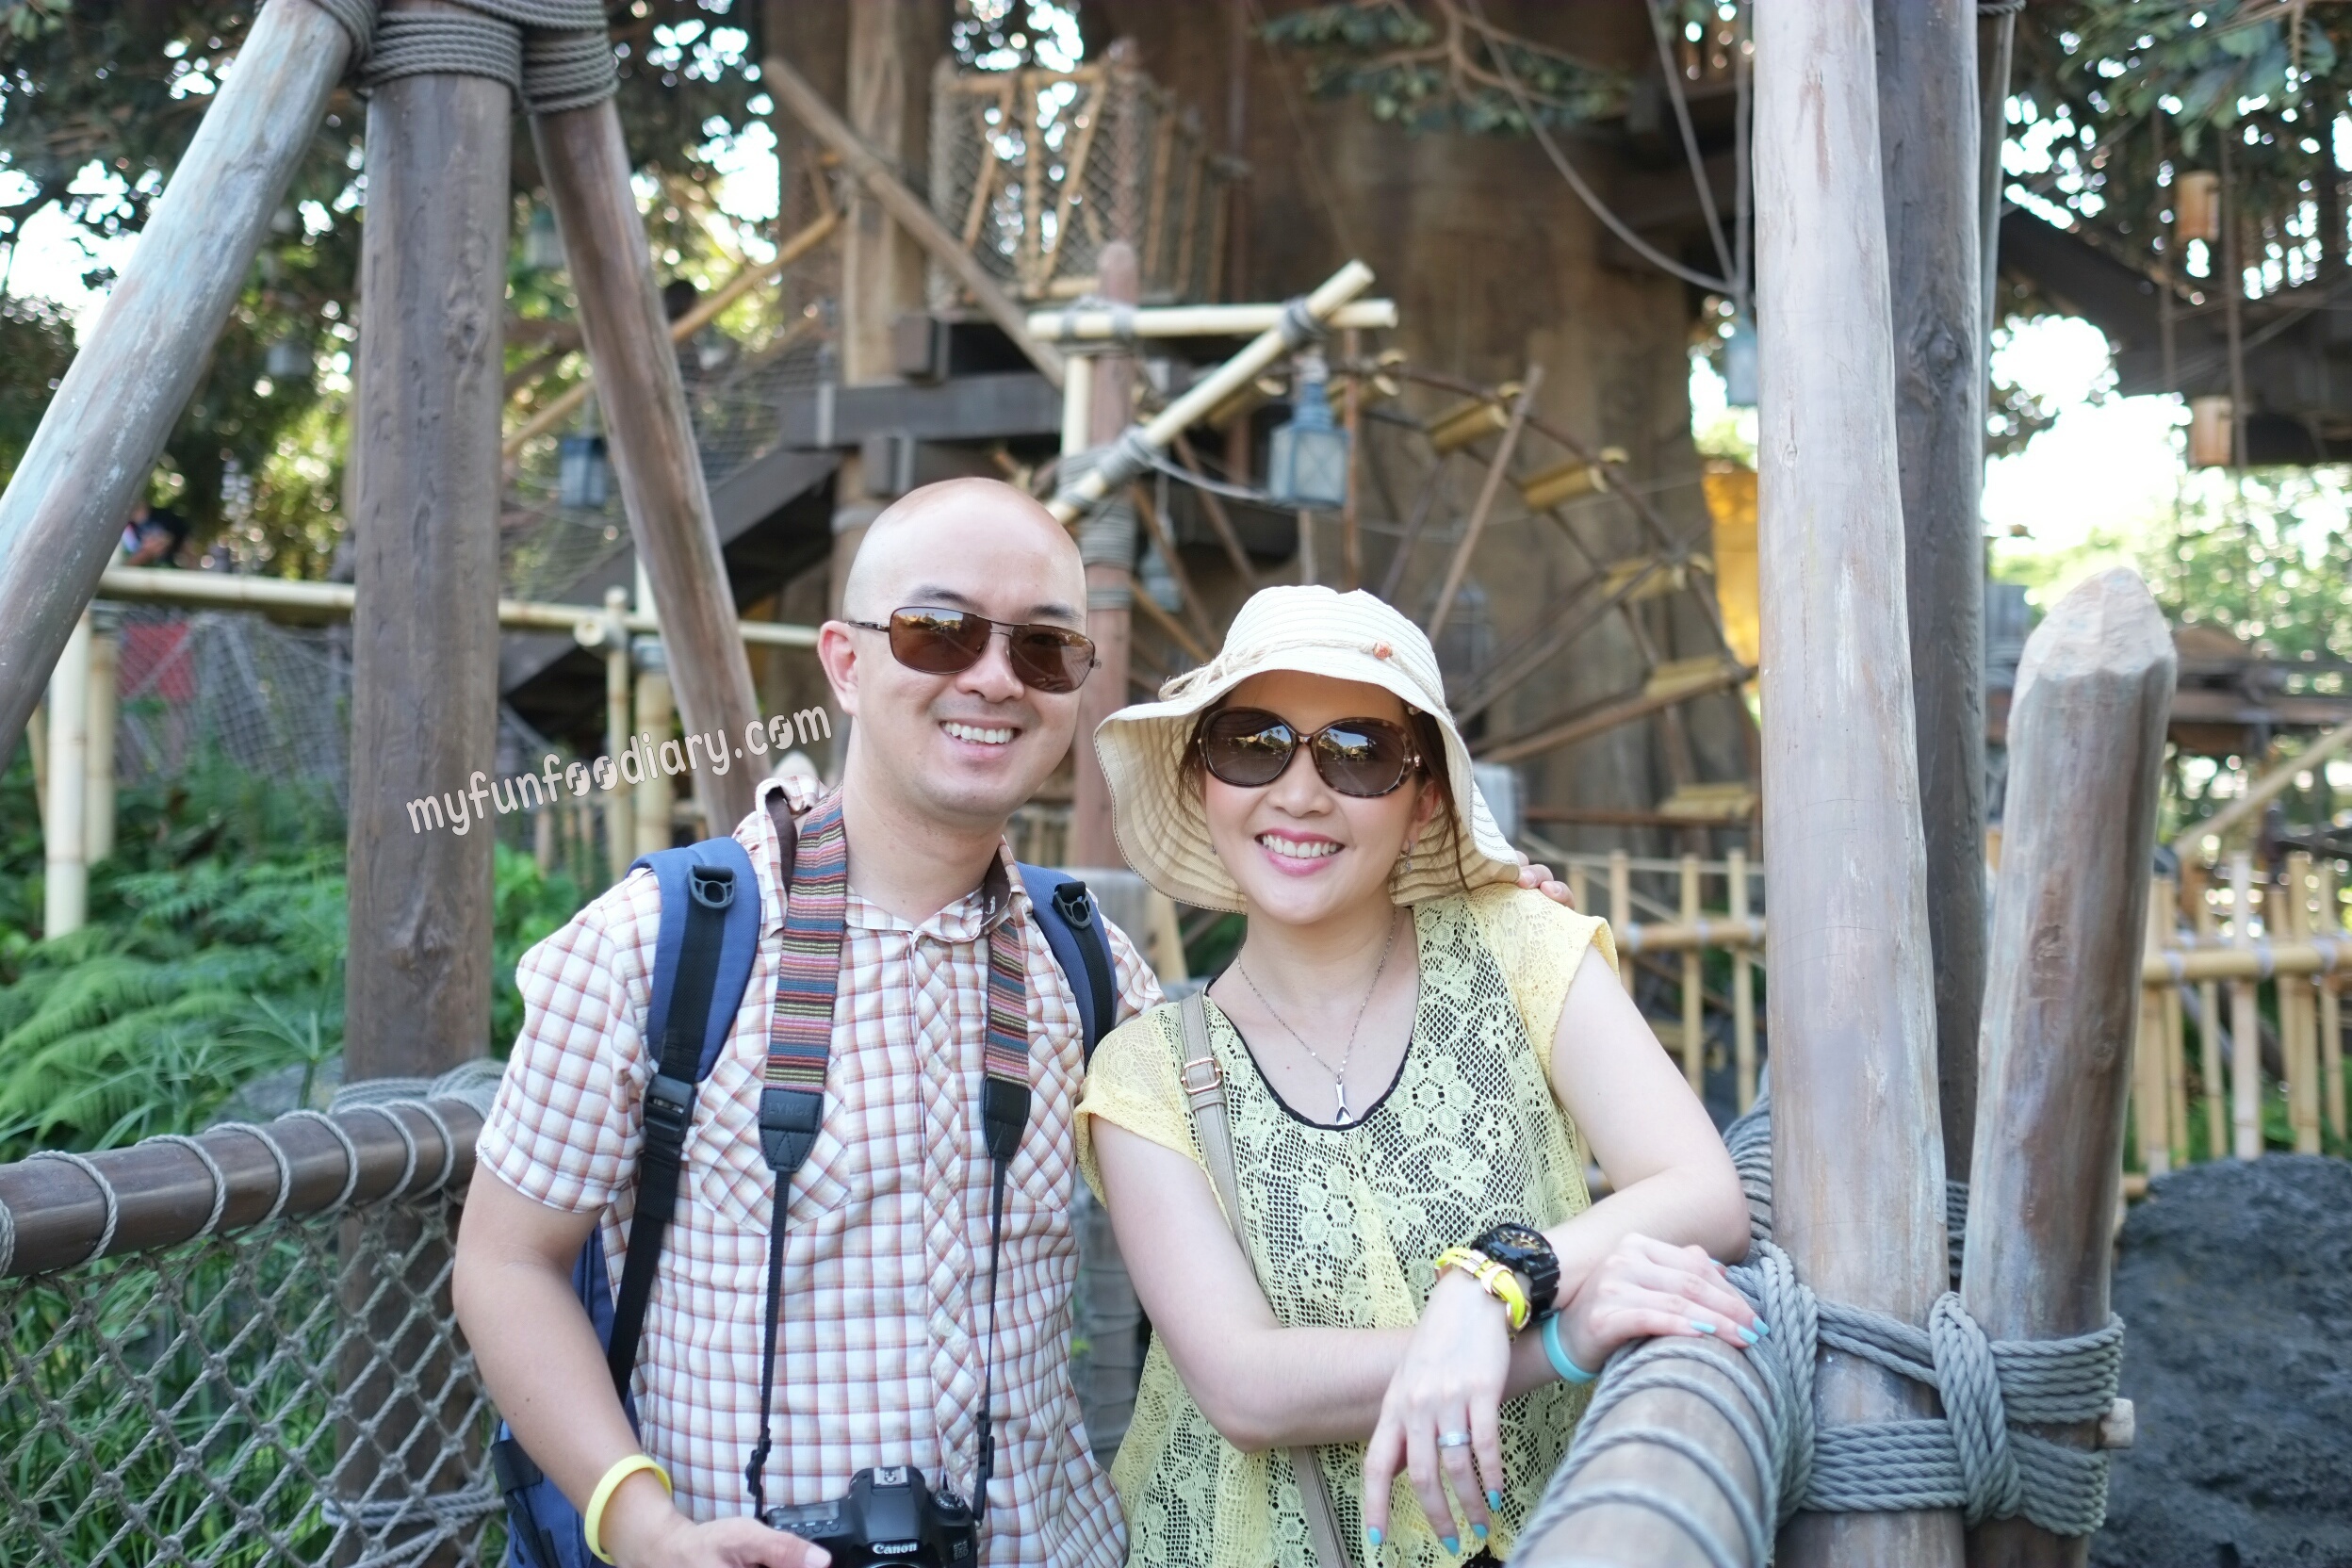 Exploring Swiss Family Treehouse at Tokyo Disneyland by Myfunfoodiary